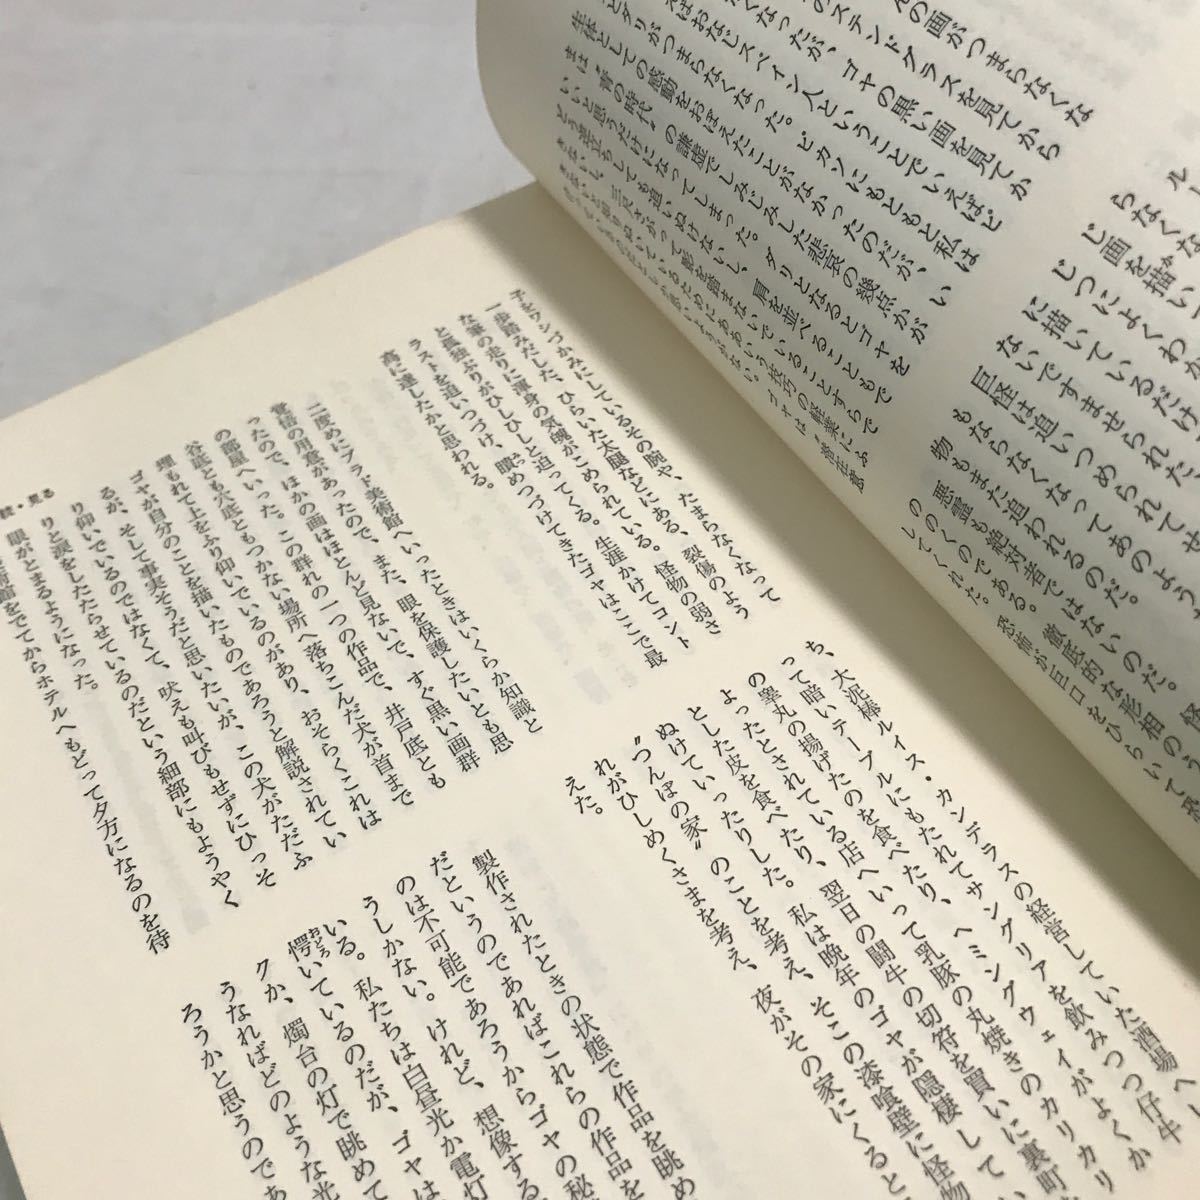 E06* слова есть .. Kaikou Takeshi все научная литература vol.V документ . человек .1983 год 2 месяц выпуск Kaikou Takeshi / работа Bungeishunju фирма с поясом оби *240118